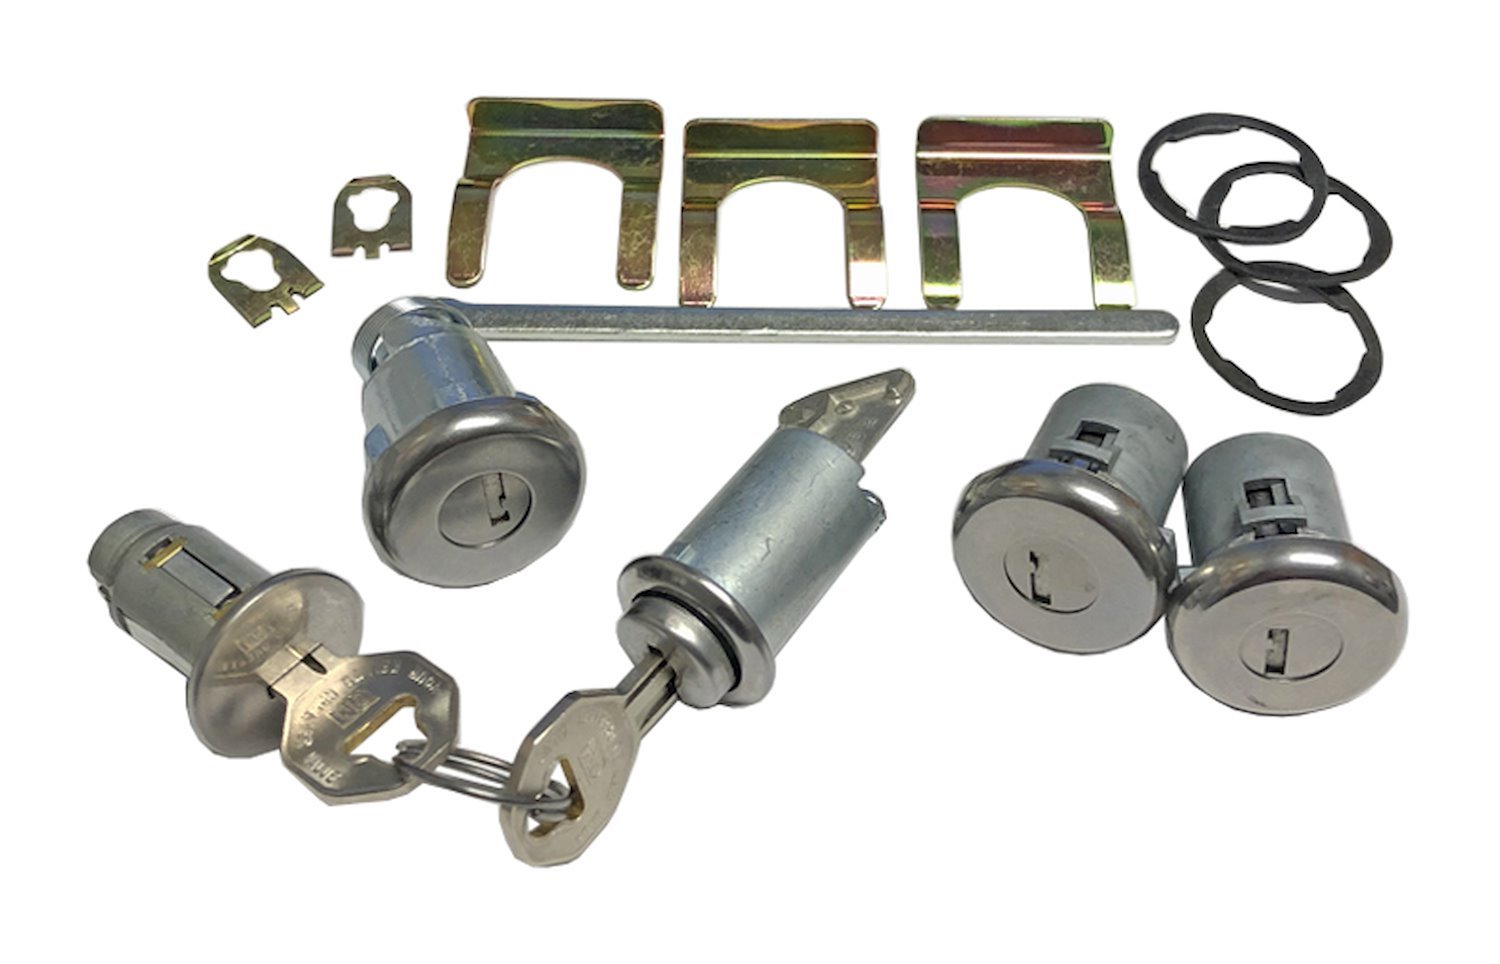 Ignition, Door, Trunk & Glovebox Lock Set Fits Select 1965 GM Models [Original Octagon Keys]